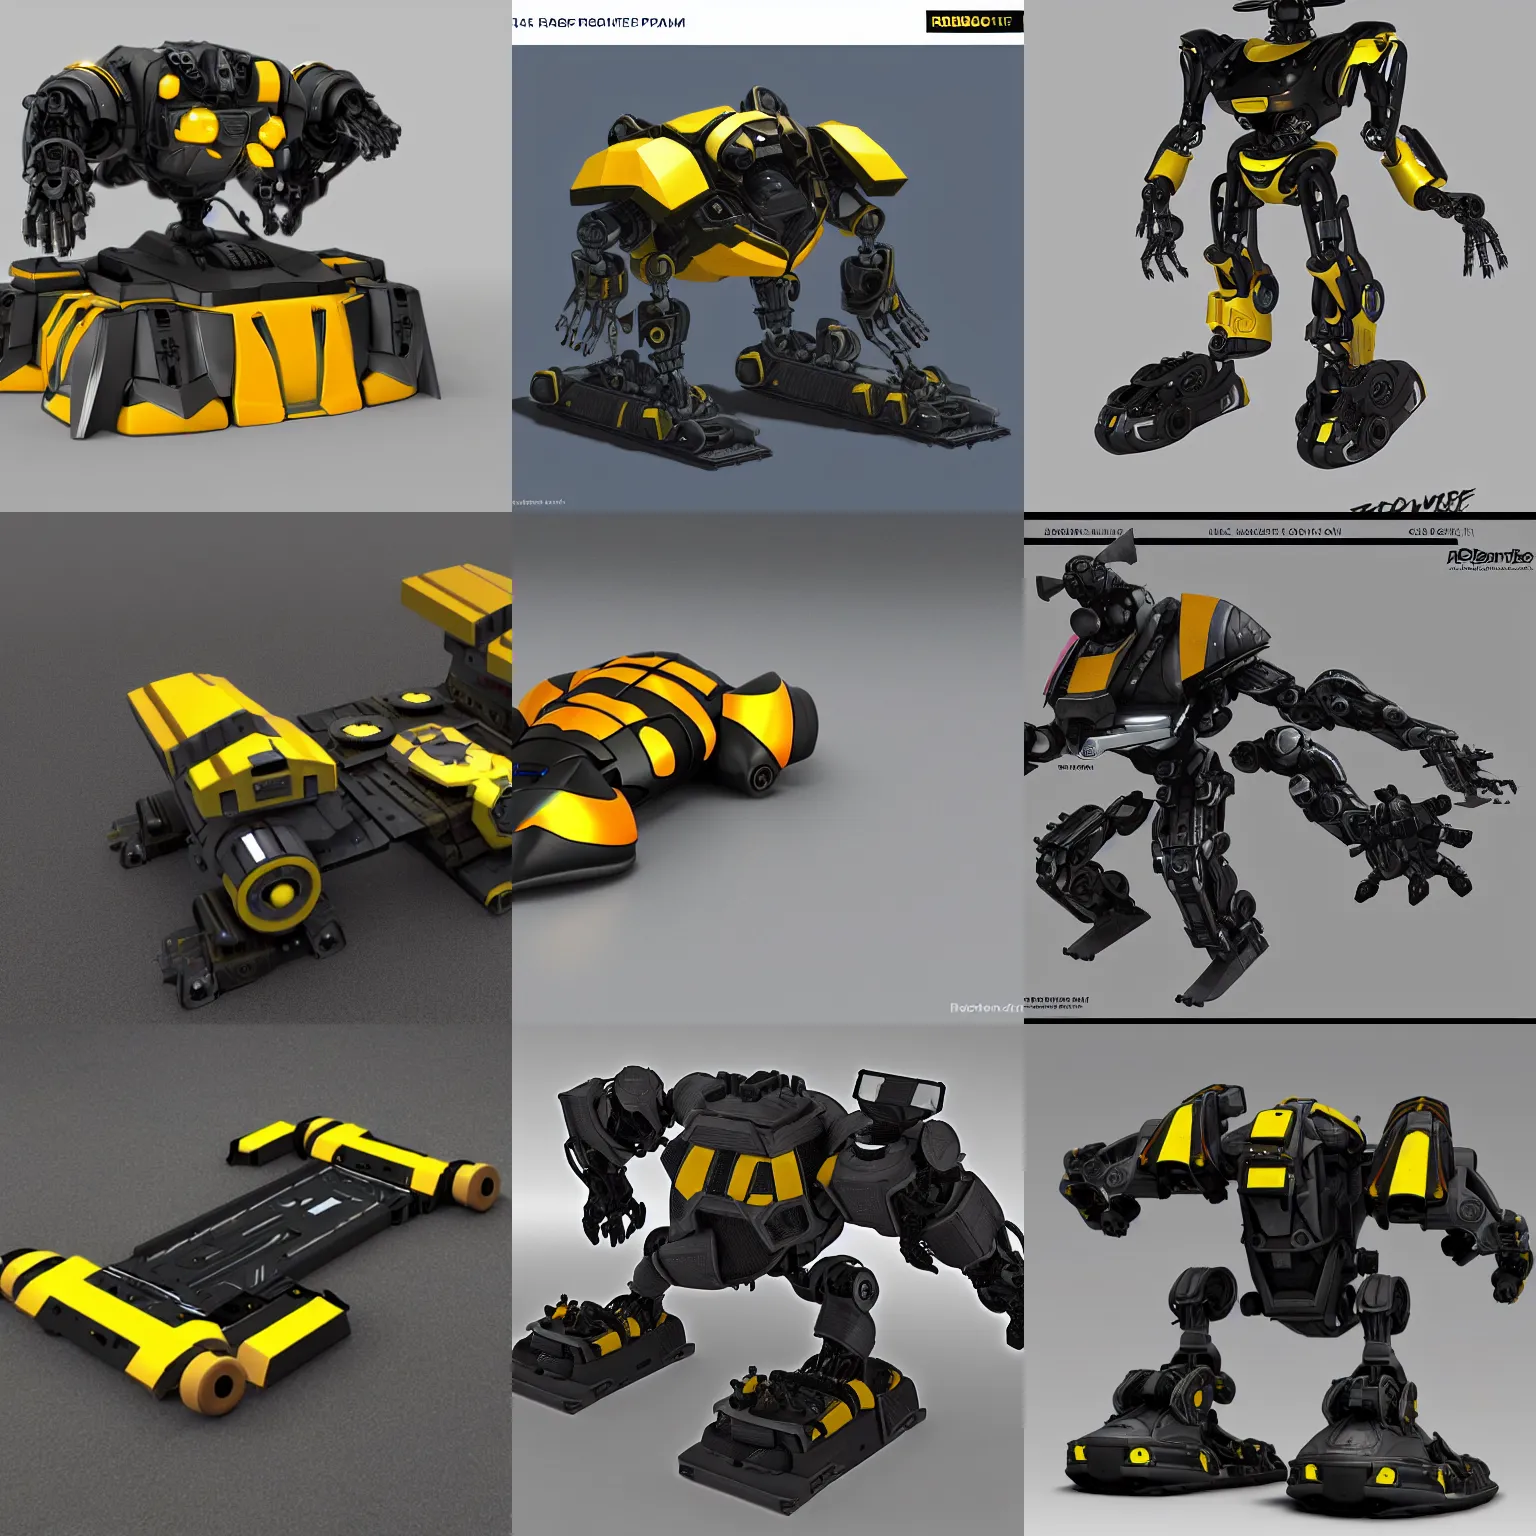 Prompt: hard surface, robotic platform, based on bumblebee